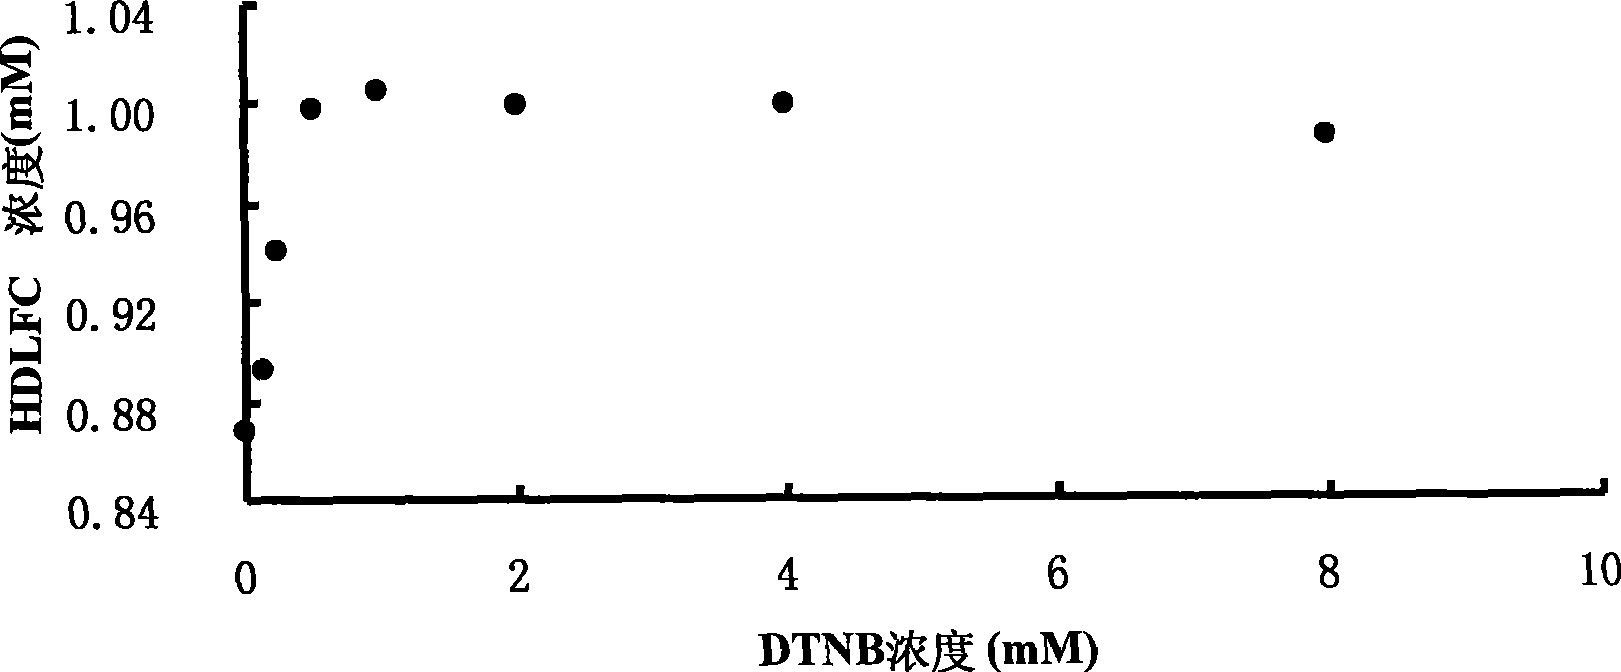 High density lipoprotein cholesterin fraction esterification rate determination method